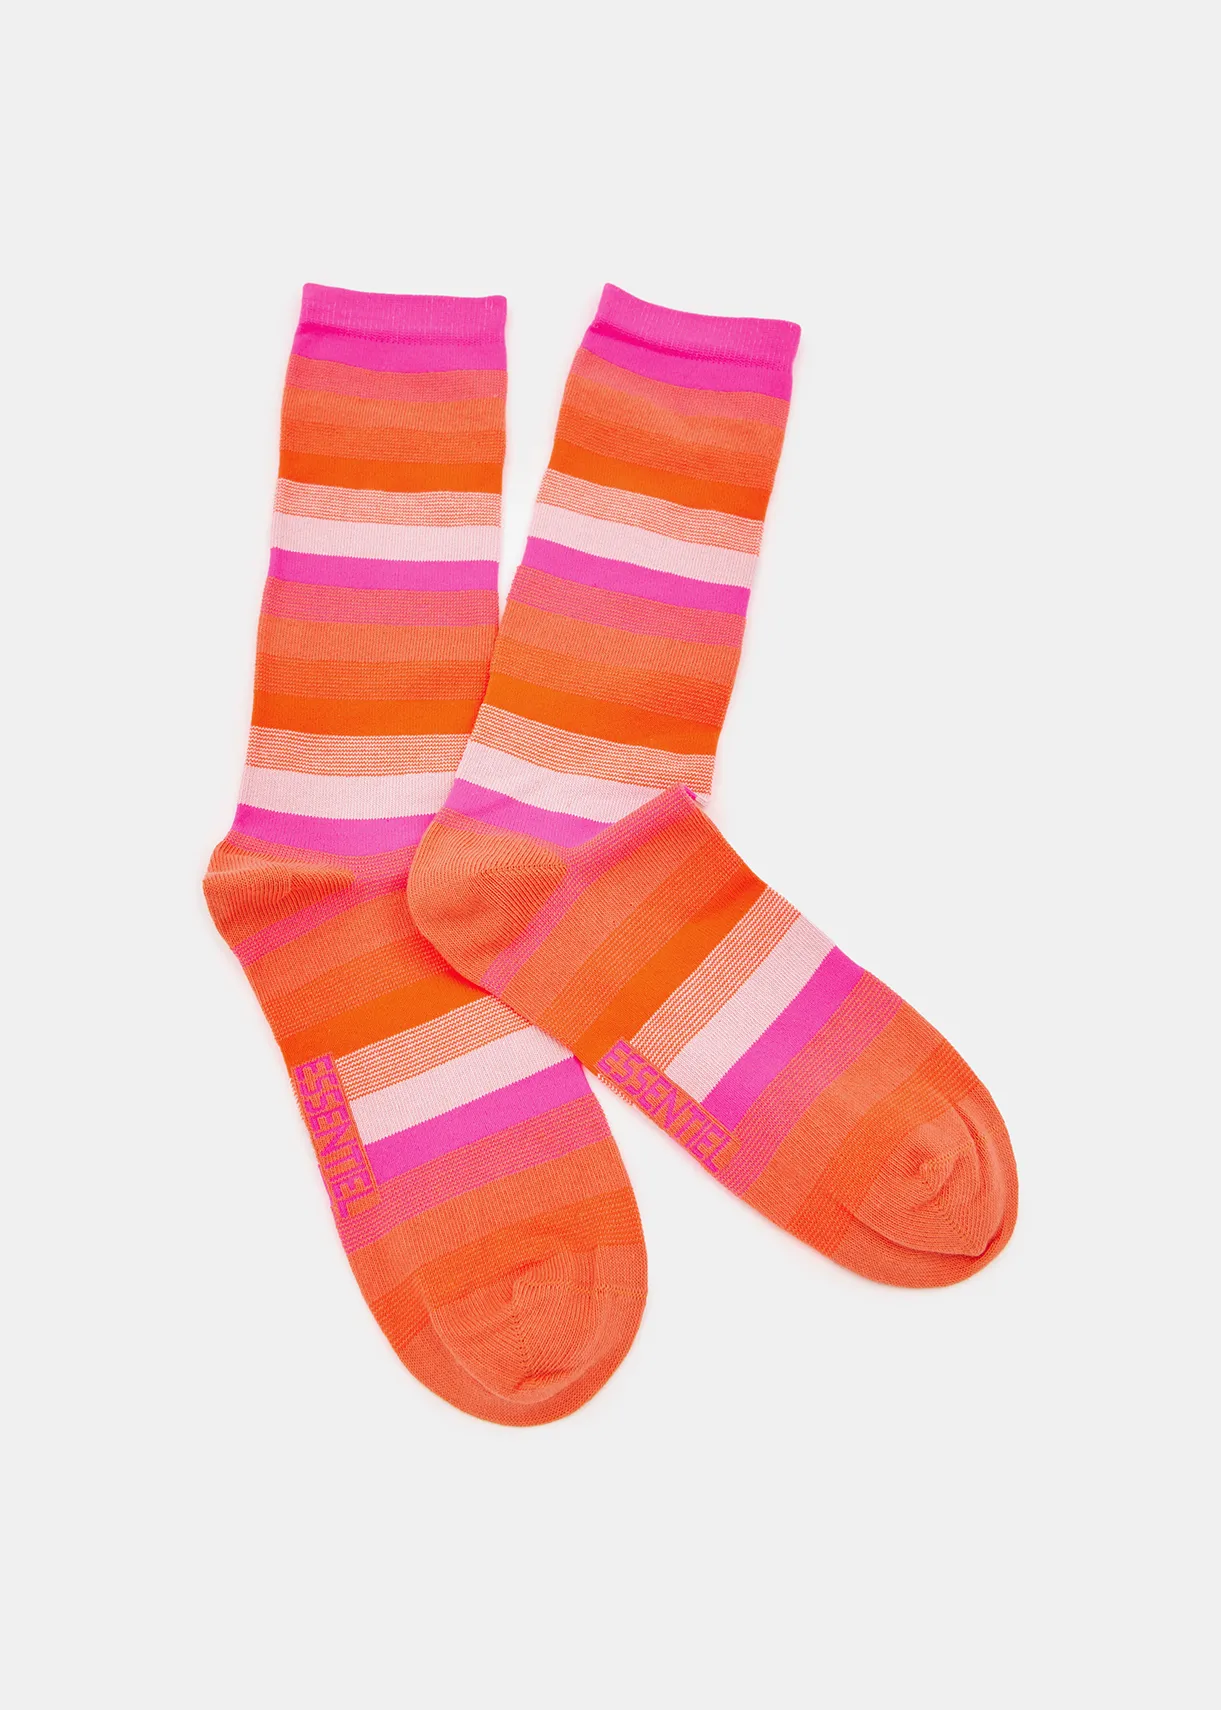 Orange, neon pink and light pink striped socks